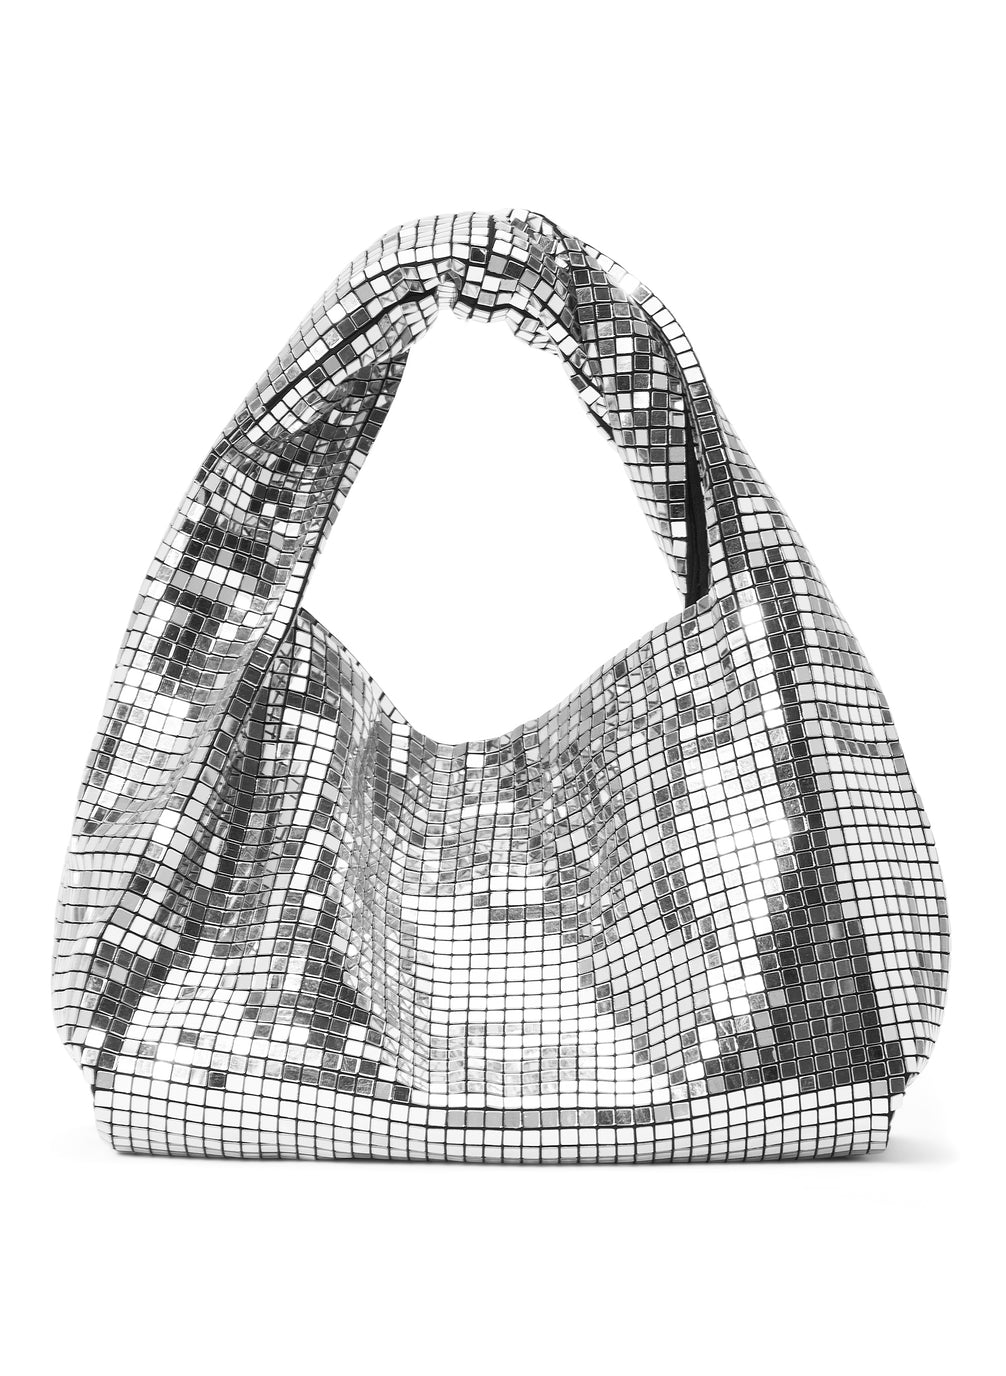 Paloma Disco Mirrored Bag